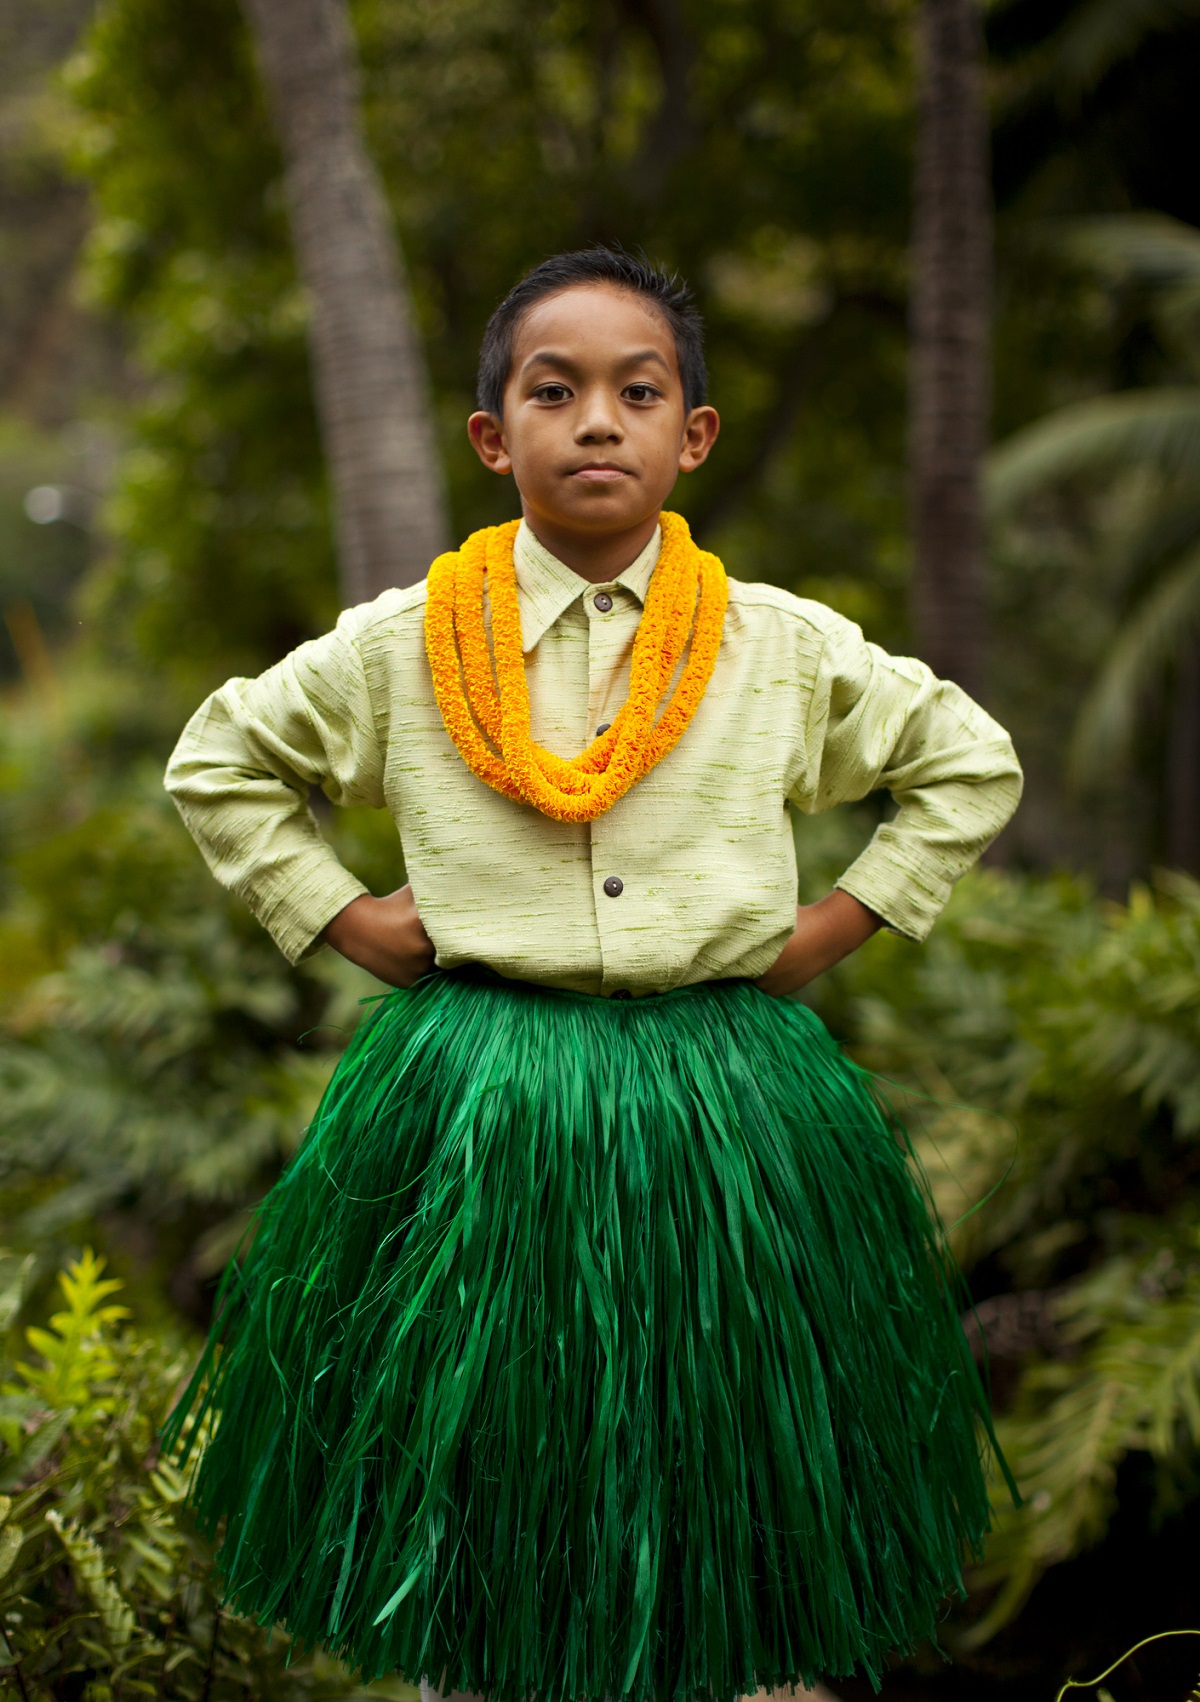 Boy in hula attire and lei